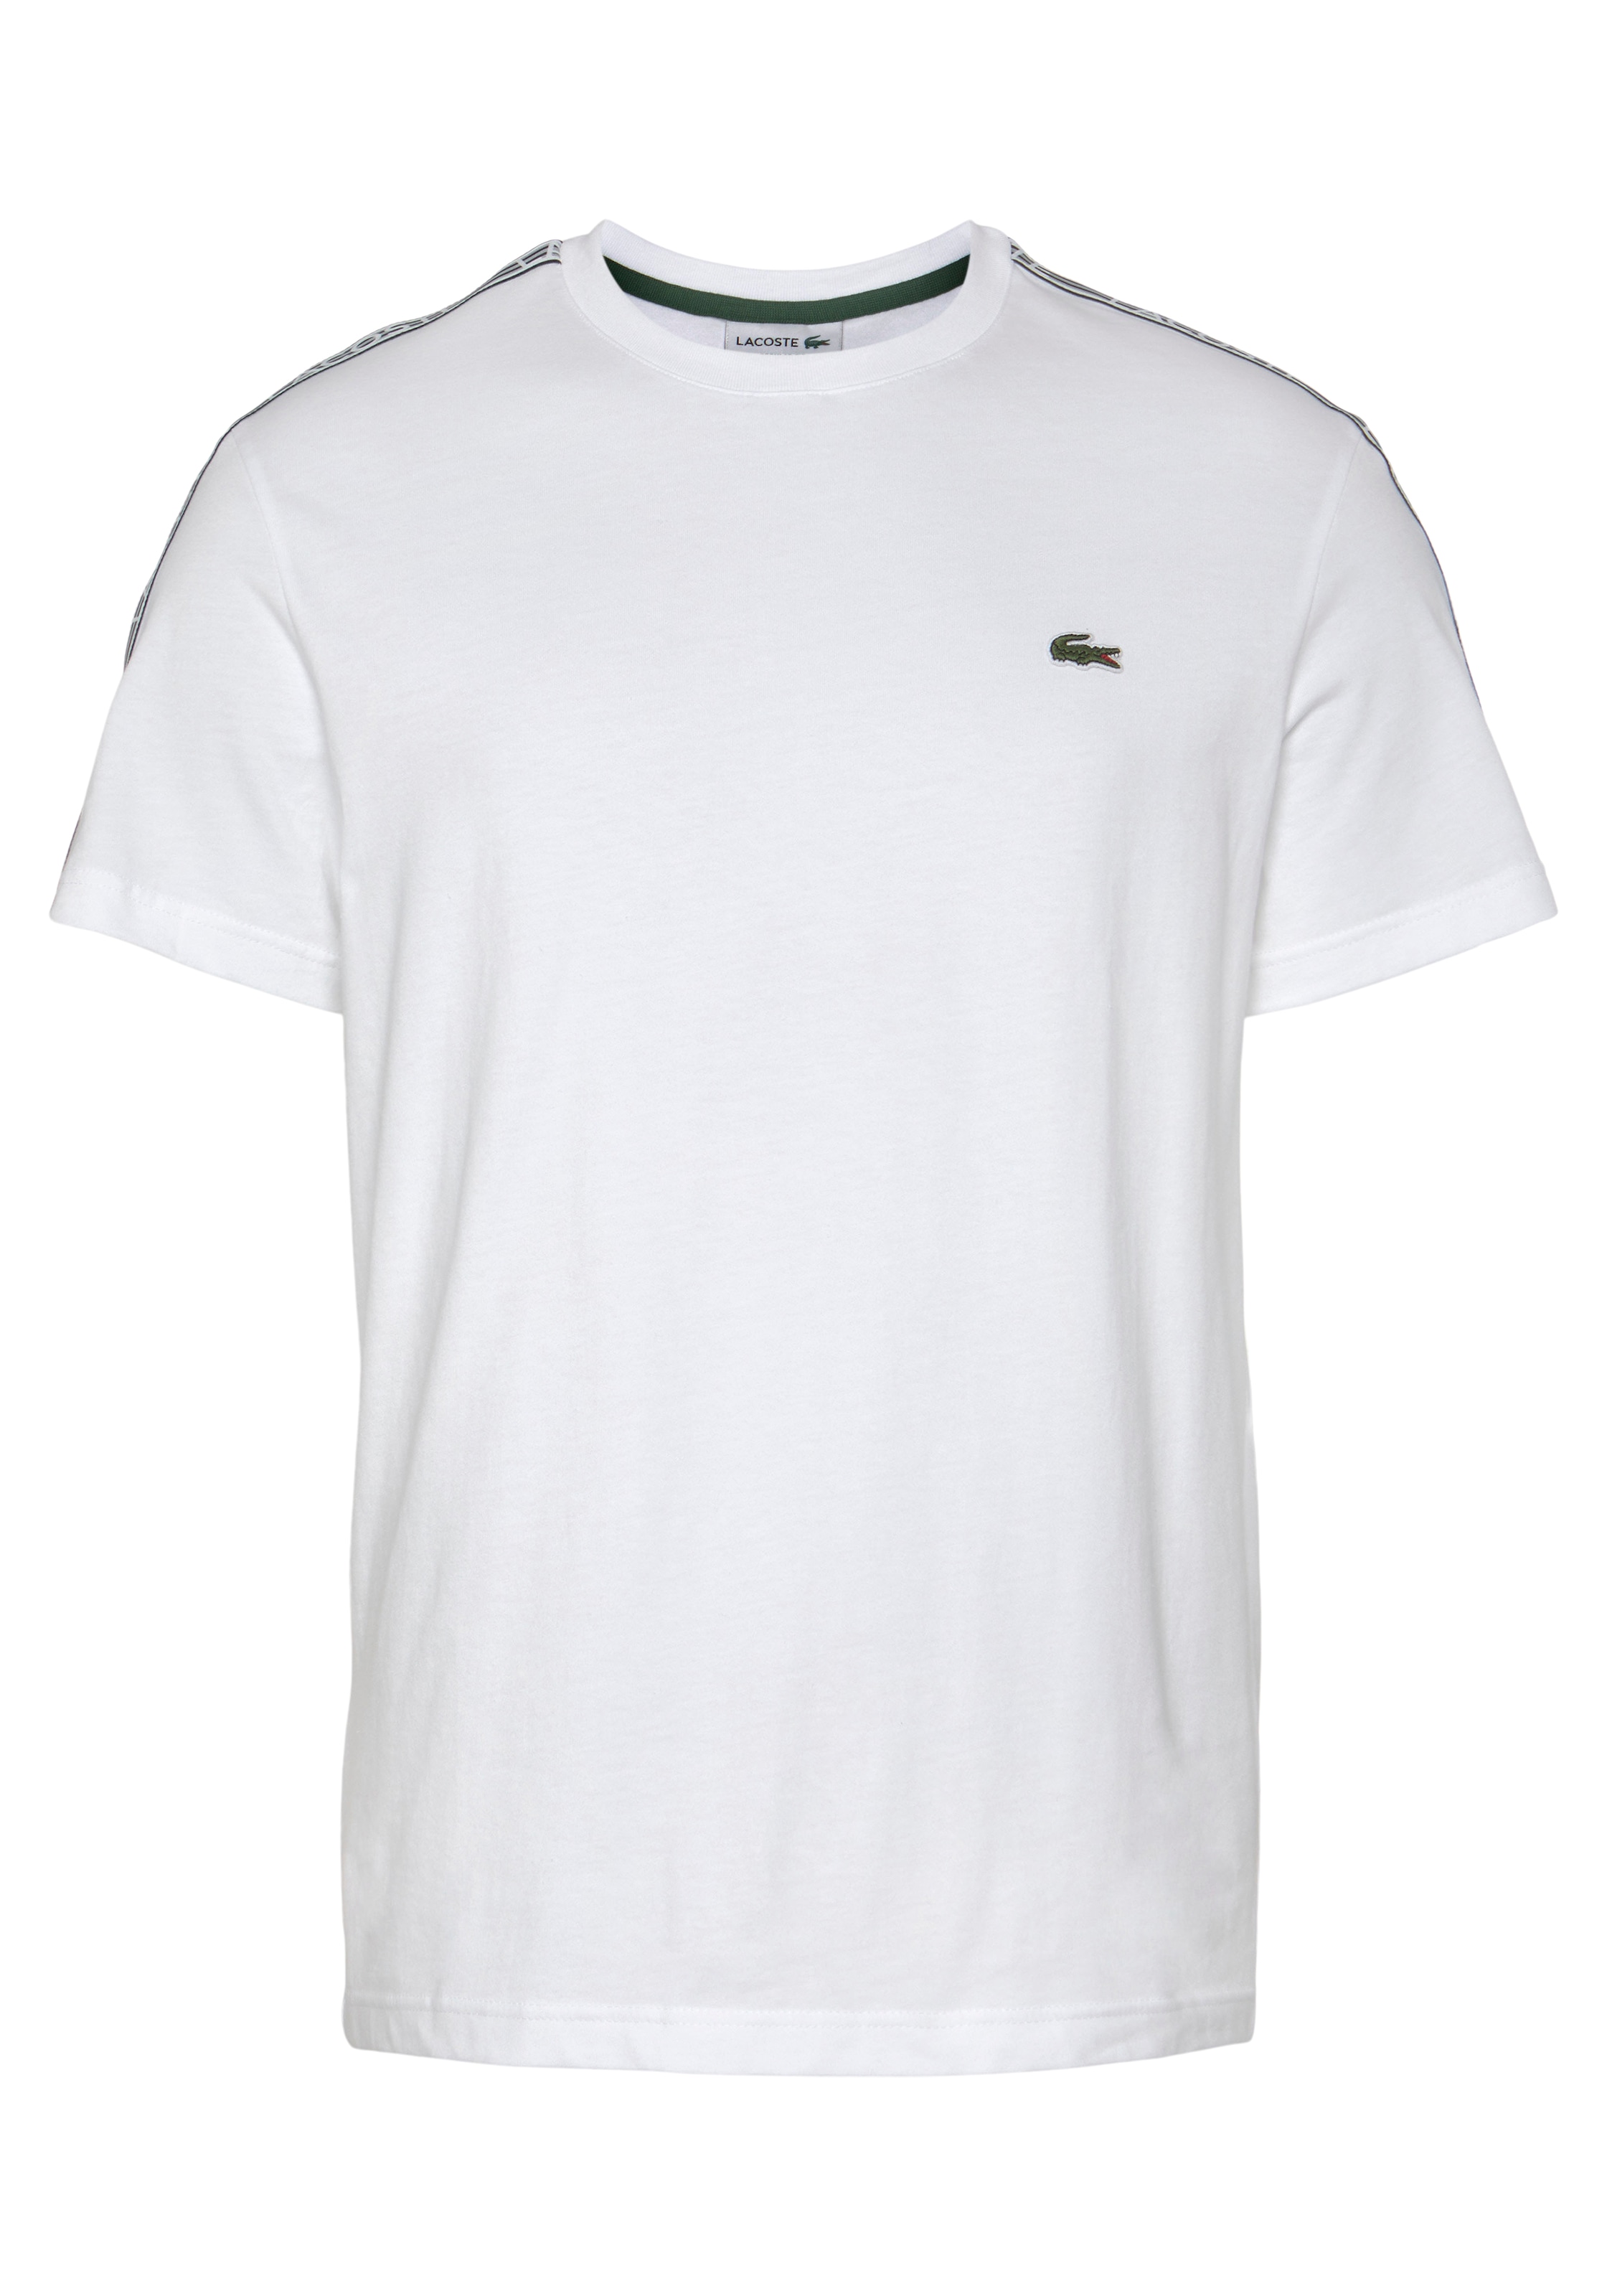 Lacoste online Kontrastband OTTO T-Shirt, mit Schultern beschriftetem bei bestellen an den